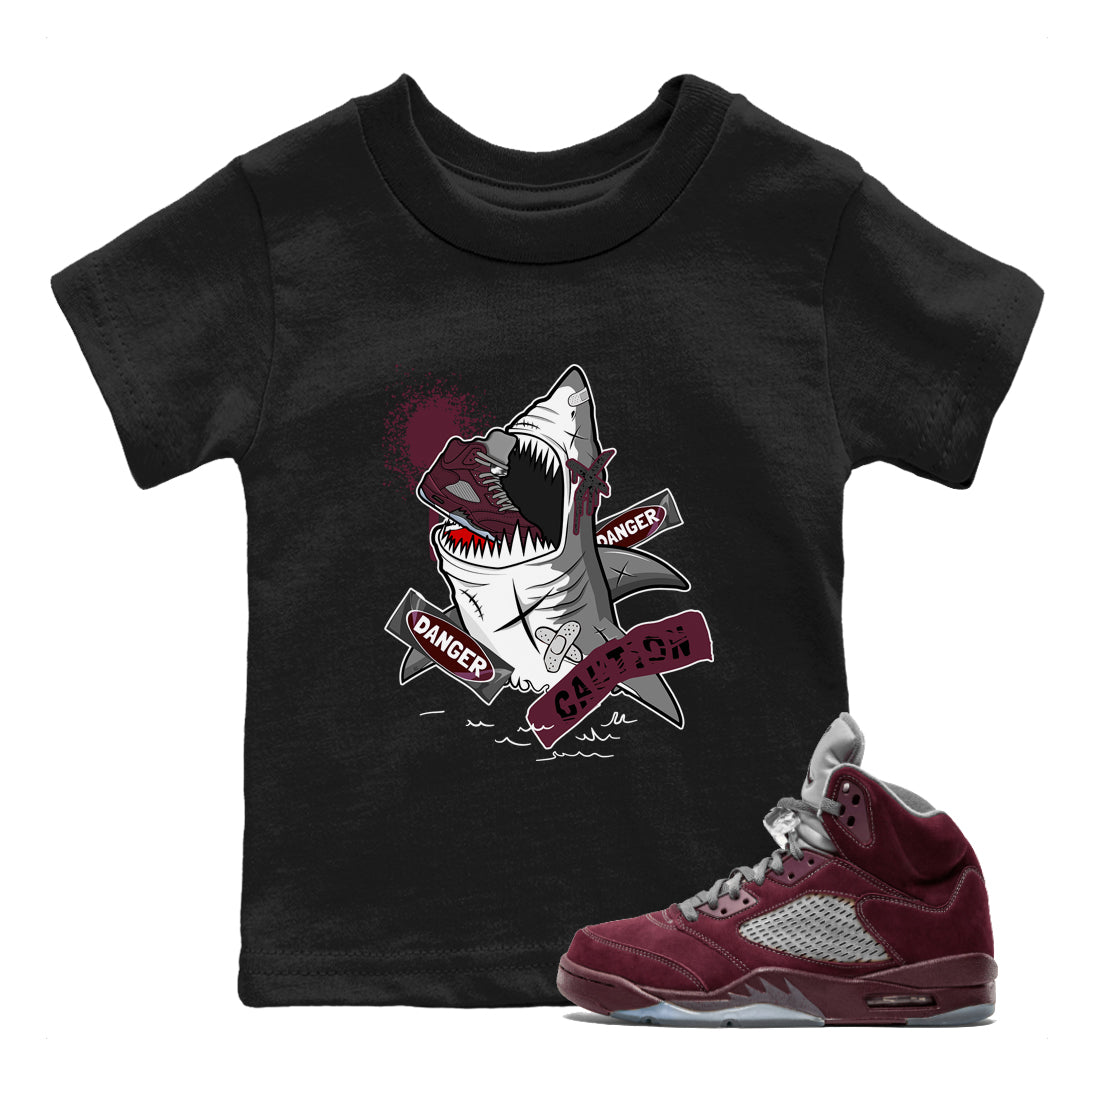 5s Burgundy shirt to match jordans Dangerous Shark Streetwear Sneaker Shirt Air Jordan 5 Burgundy Drip Gear Zone Sneaker Matching Clothing Baby Toddler Black 1 T-Shirt